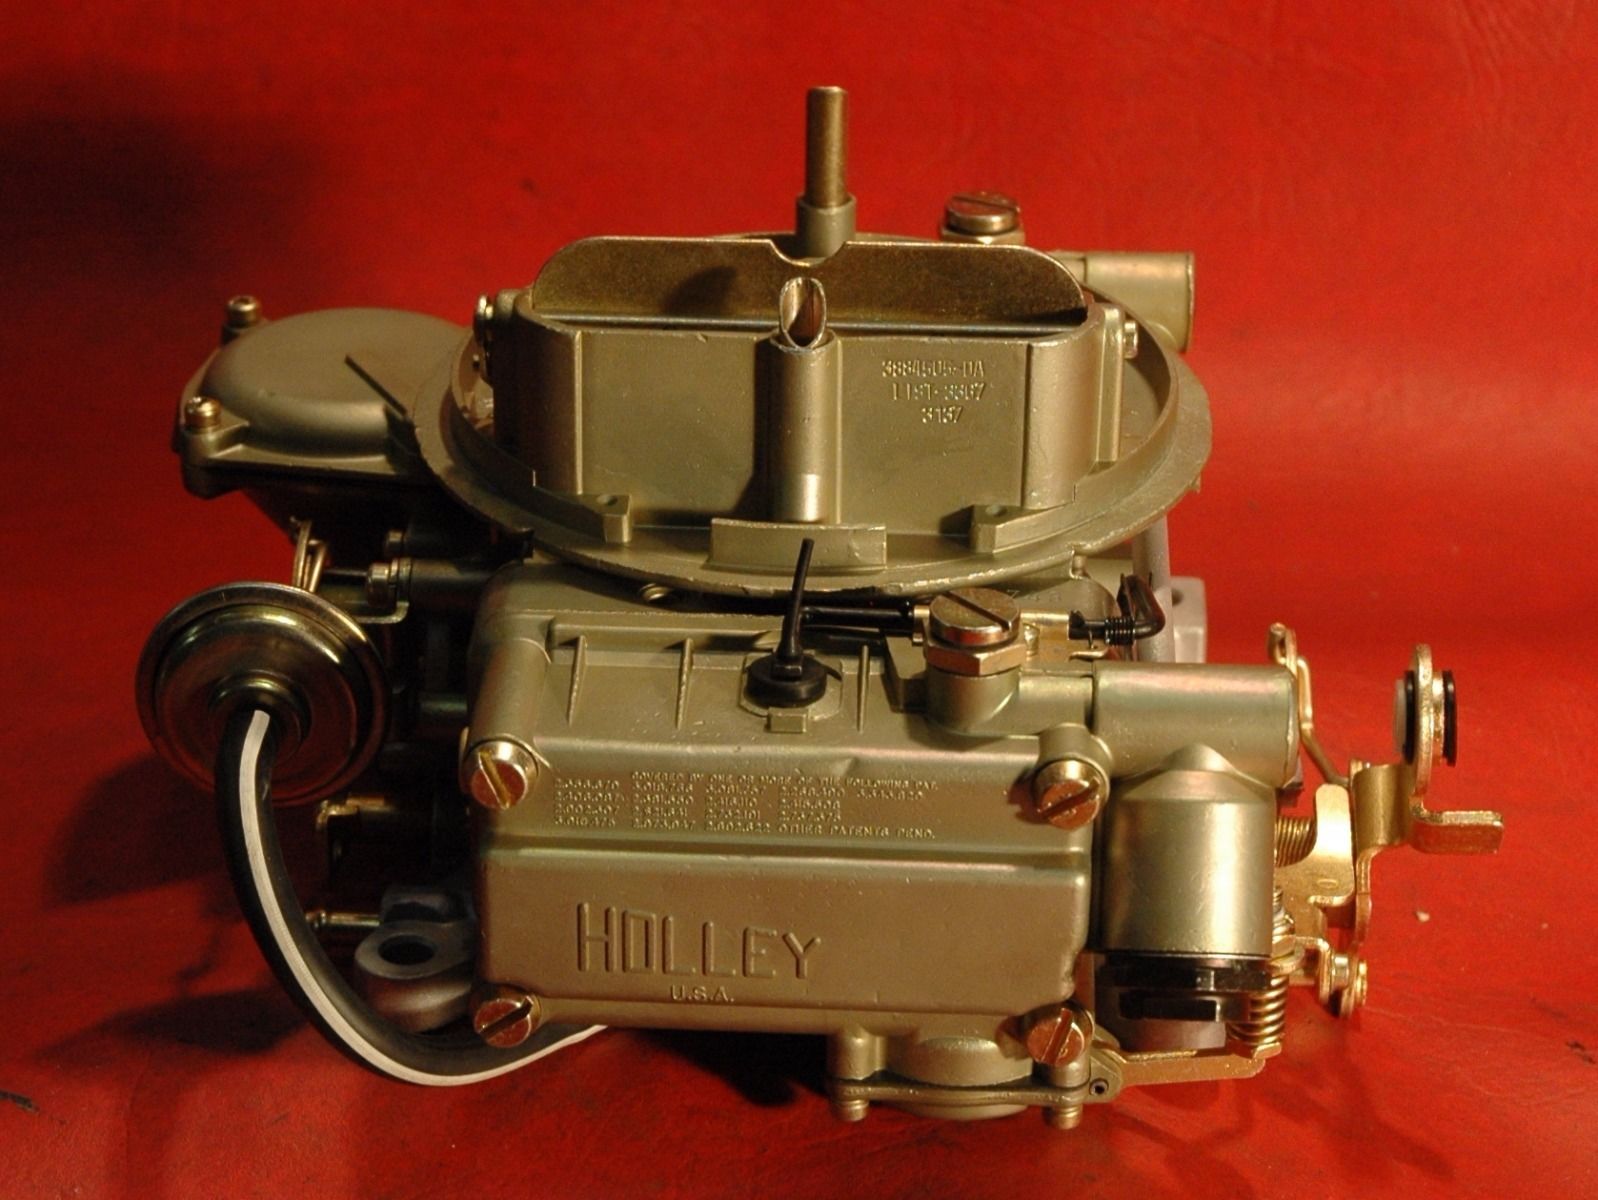 1966 Corvette Holley Carburetor #3367 NOS 327 300/350 HP